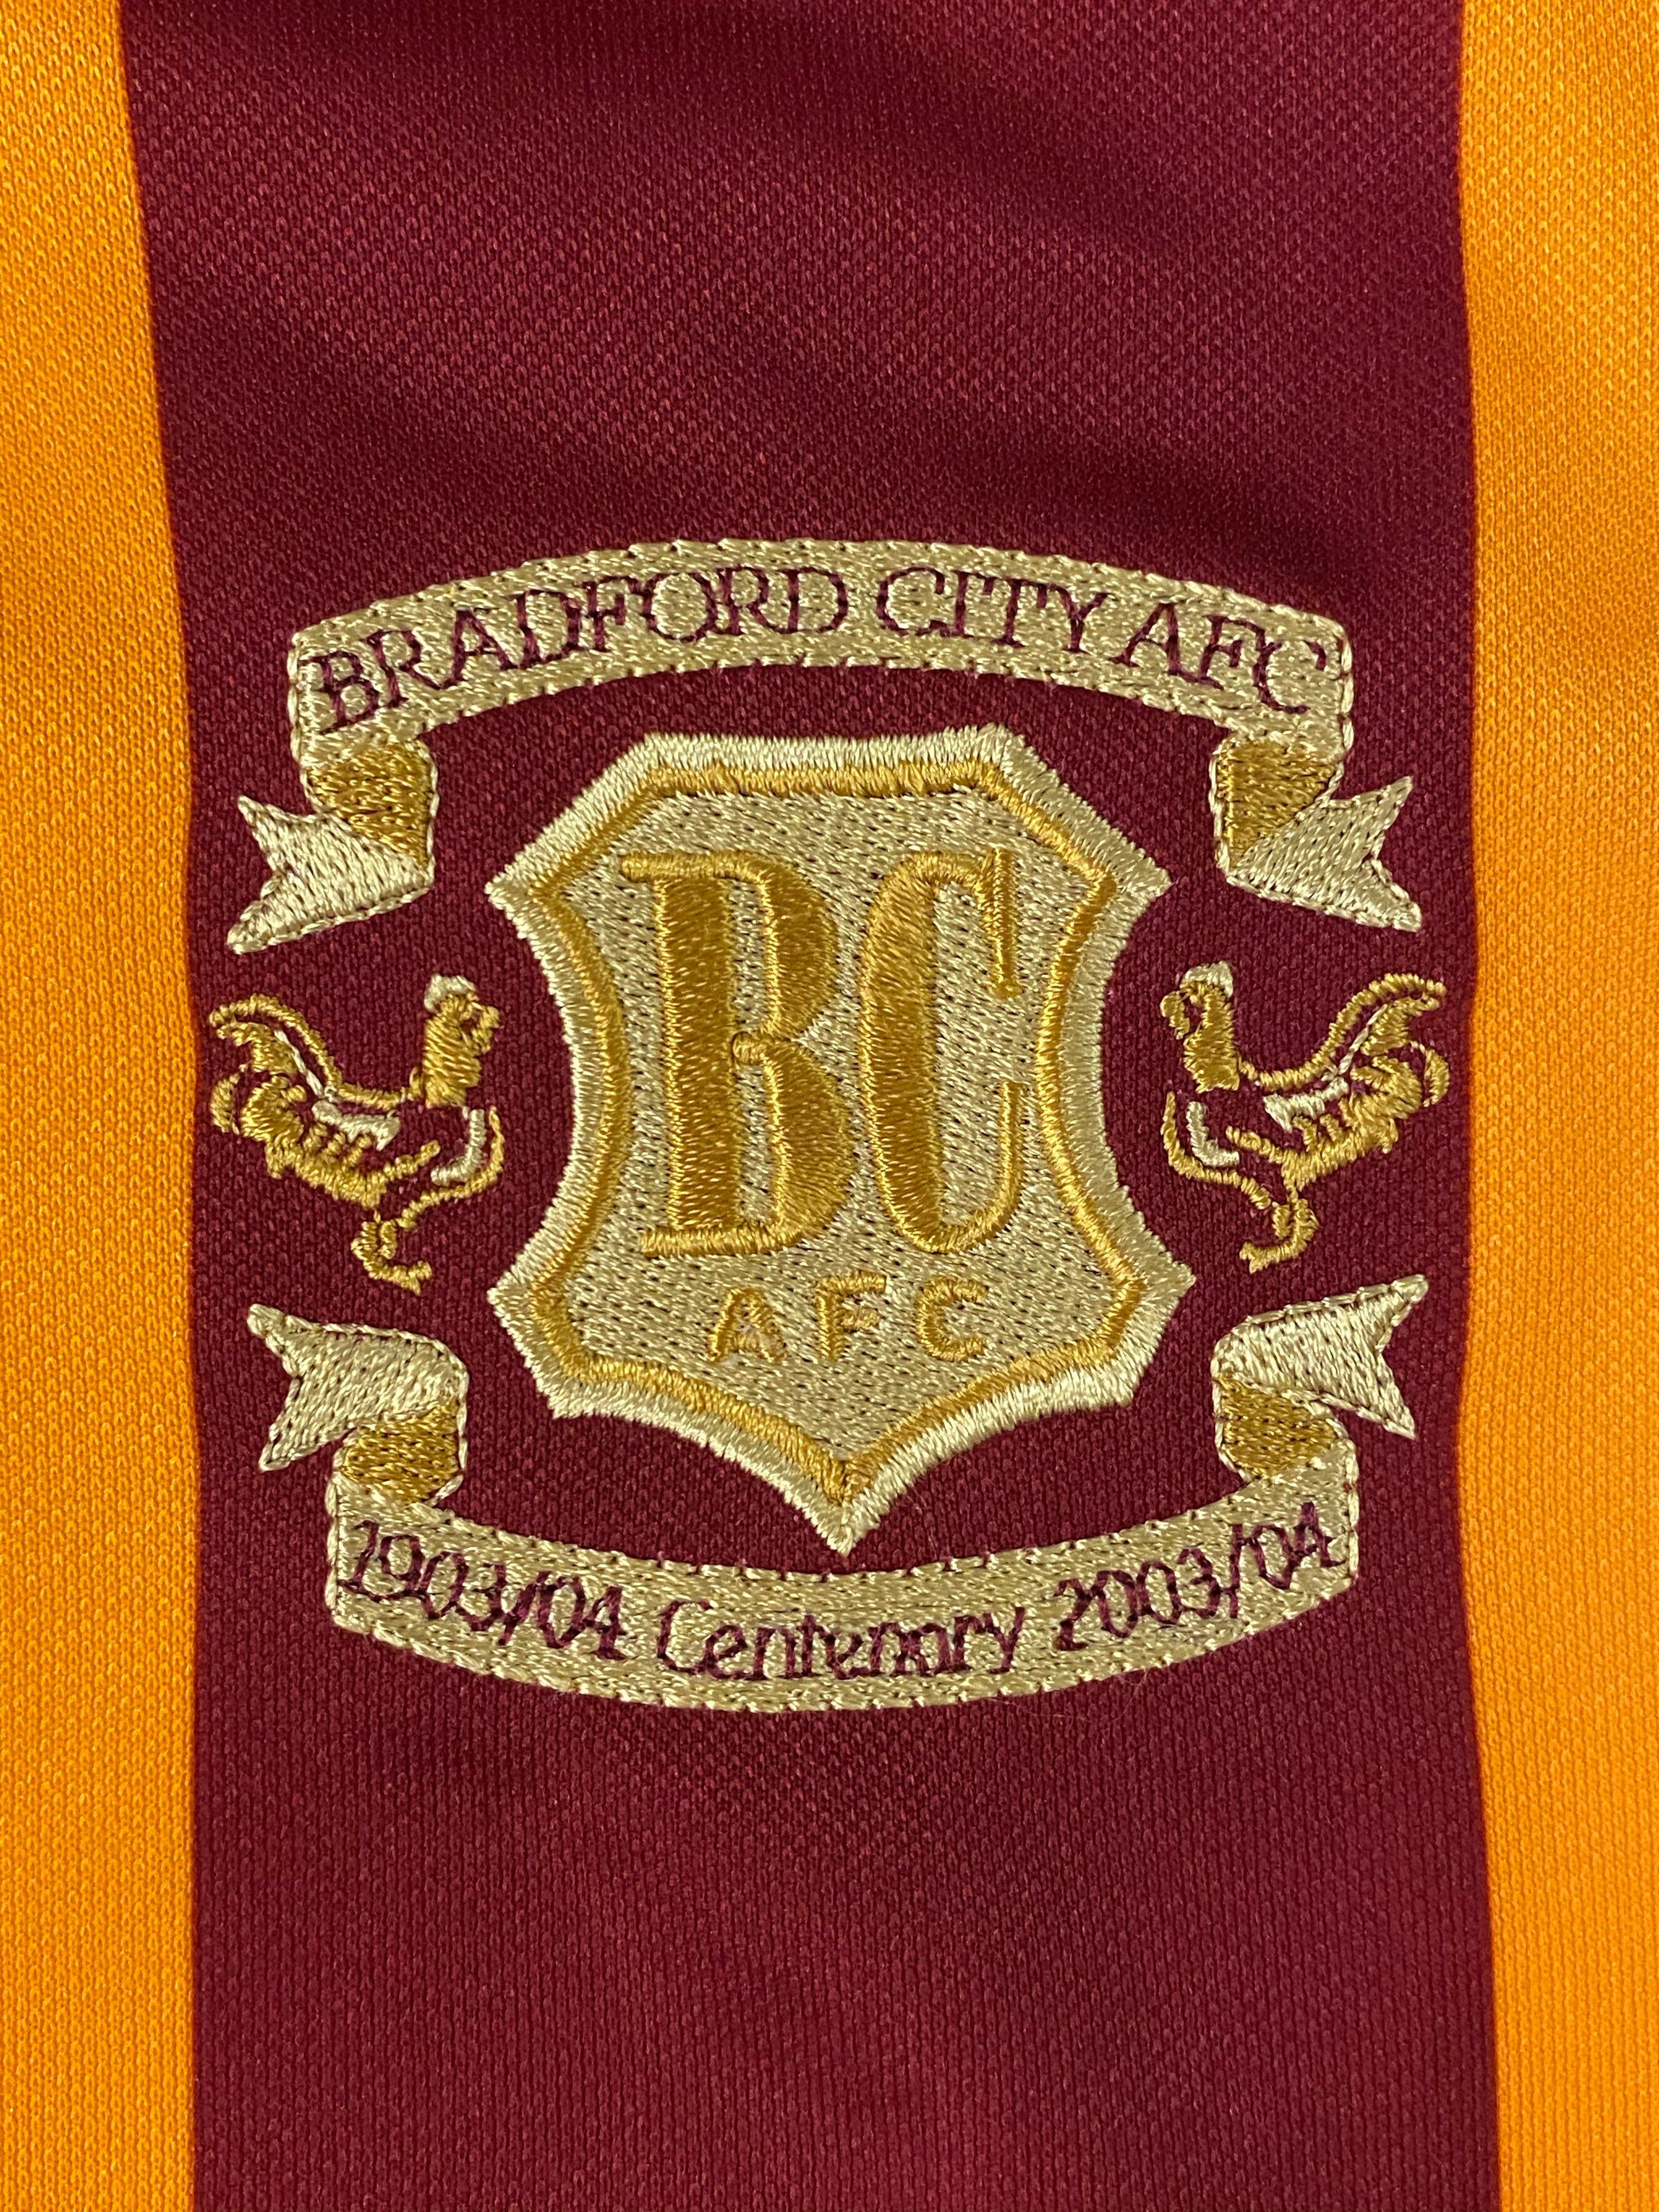 2003/04 Bradford City Home Centenary Maillot L/S (L) 8/10